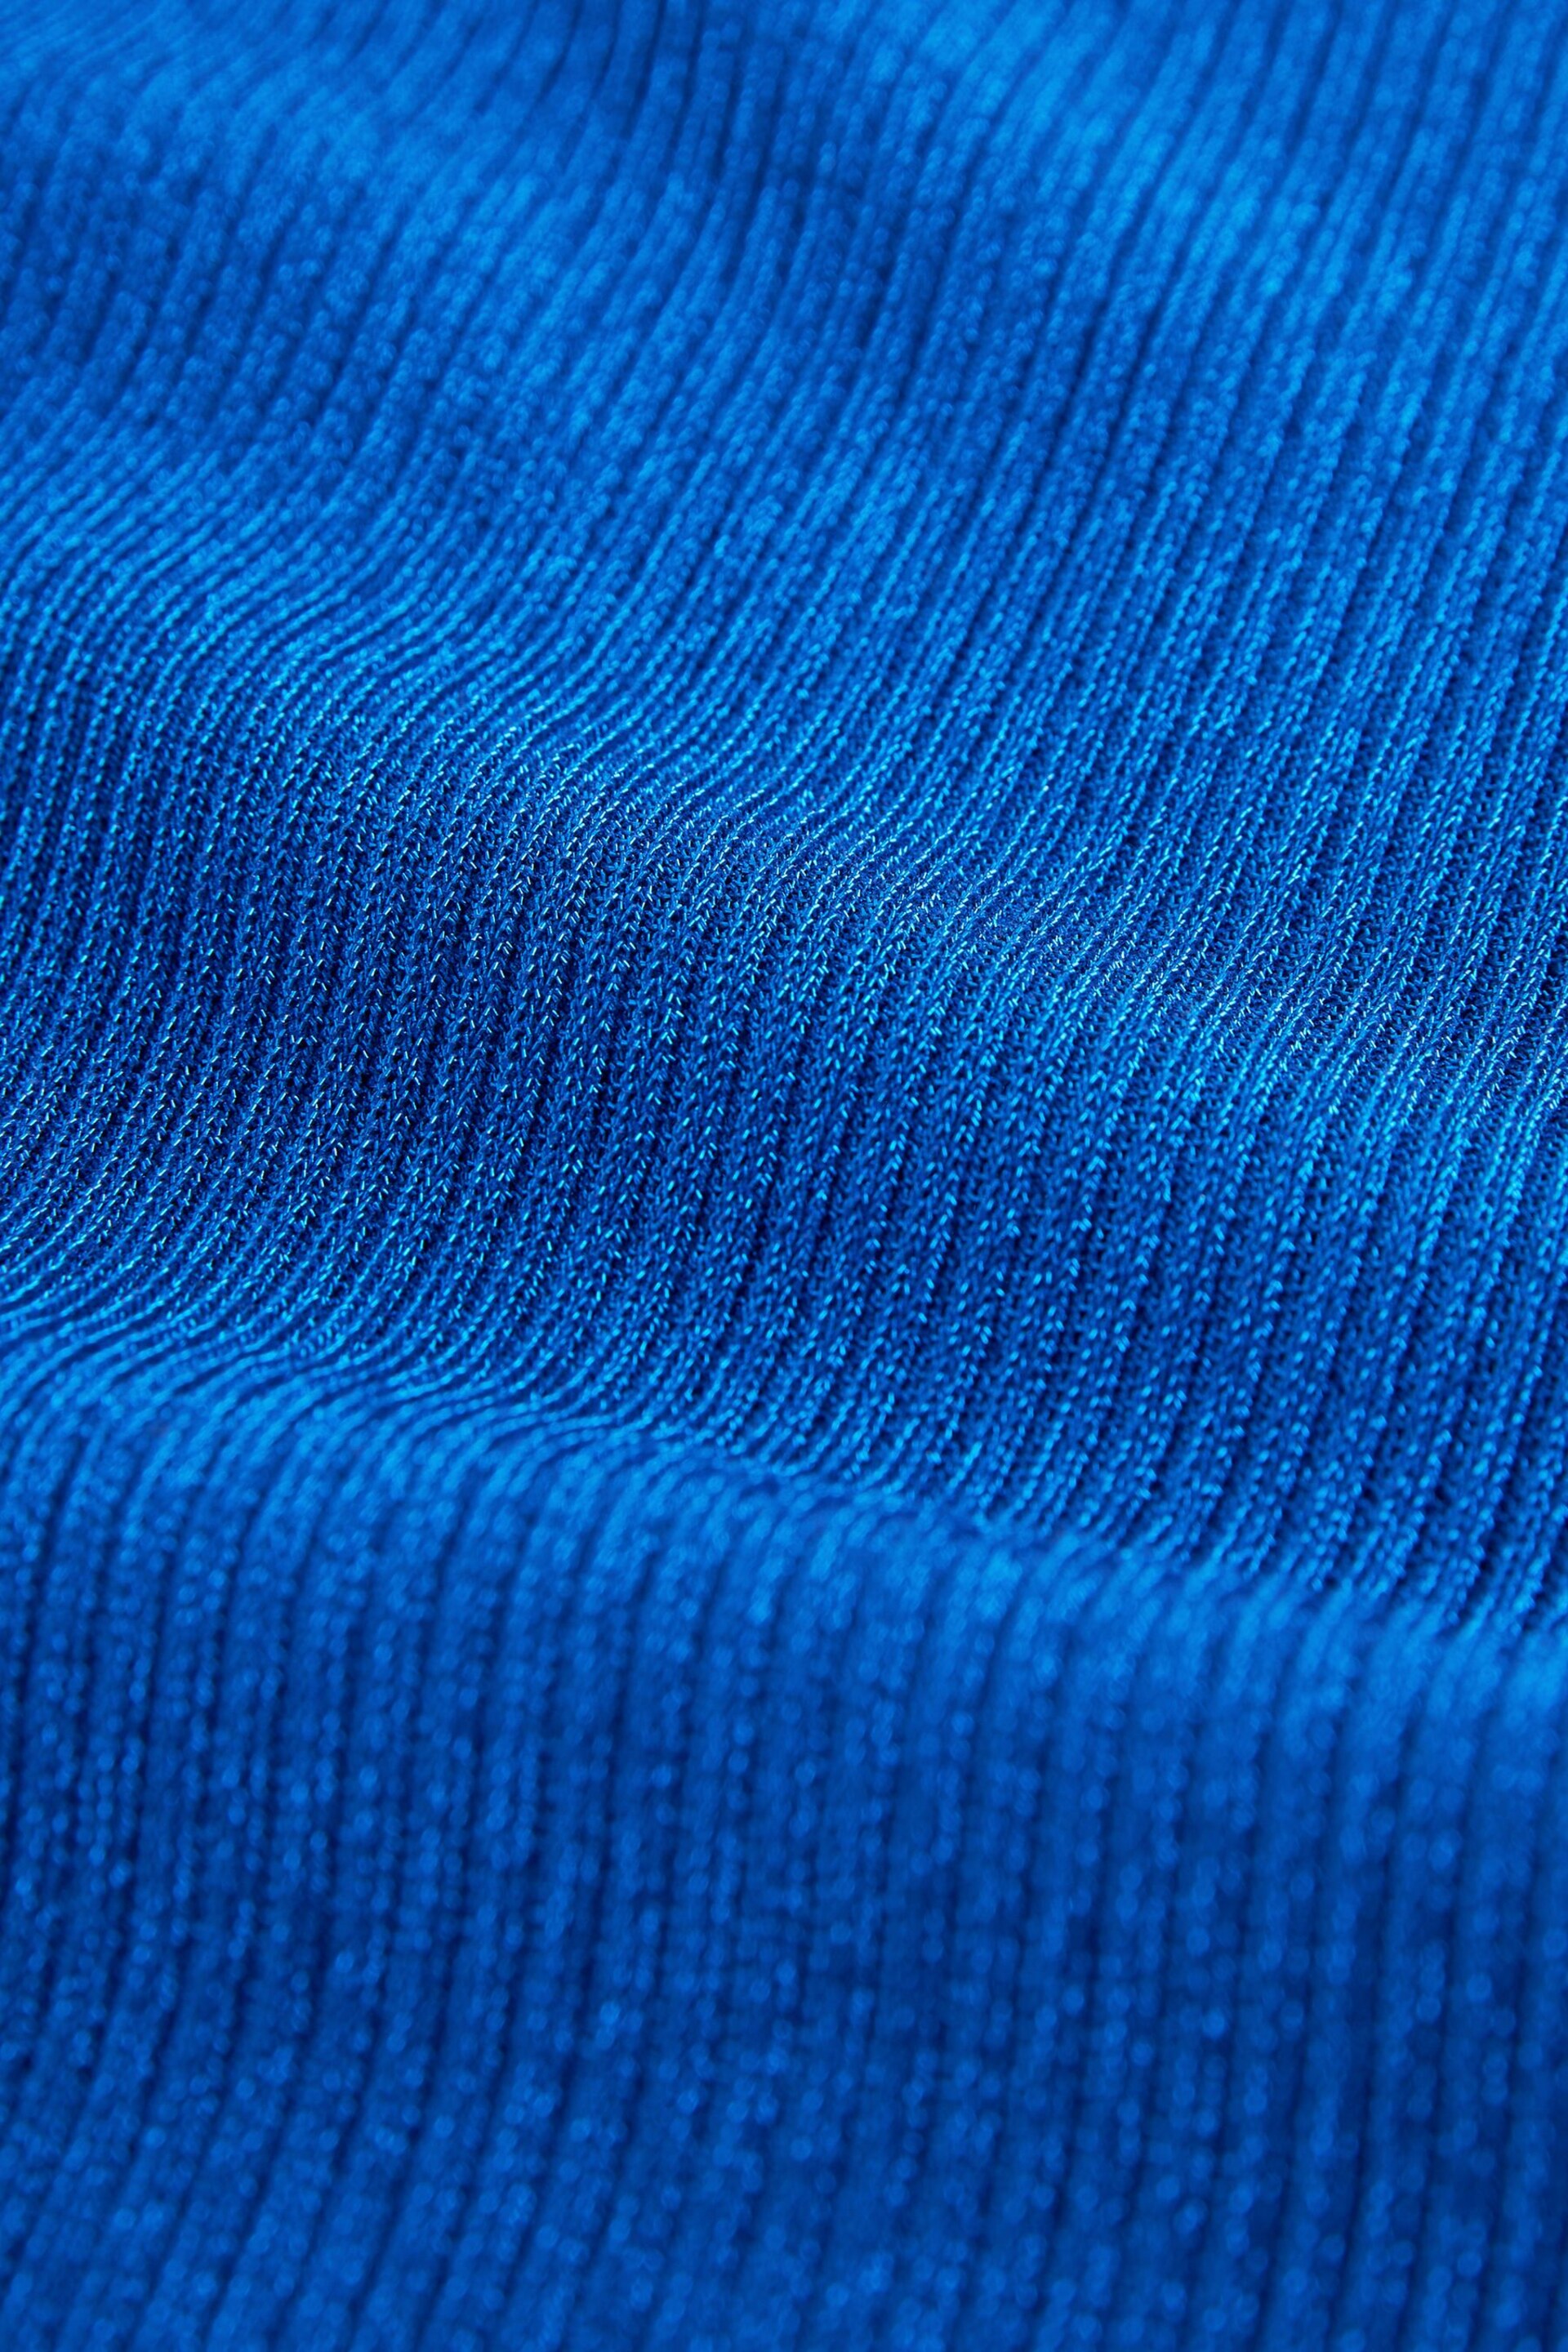 Cobalt Blue Metallic Knitted Vest - Image 6 of 6